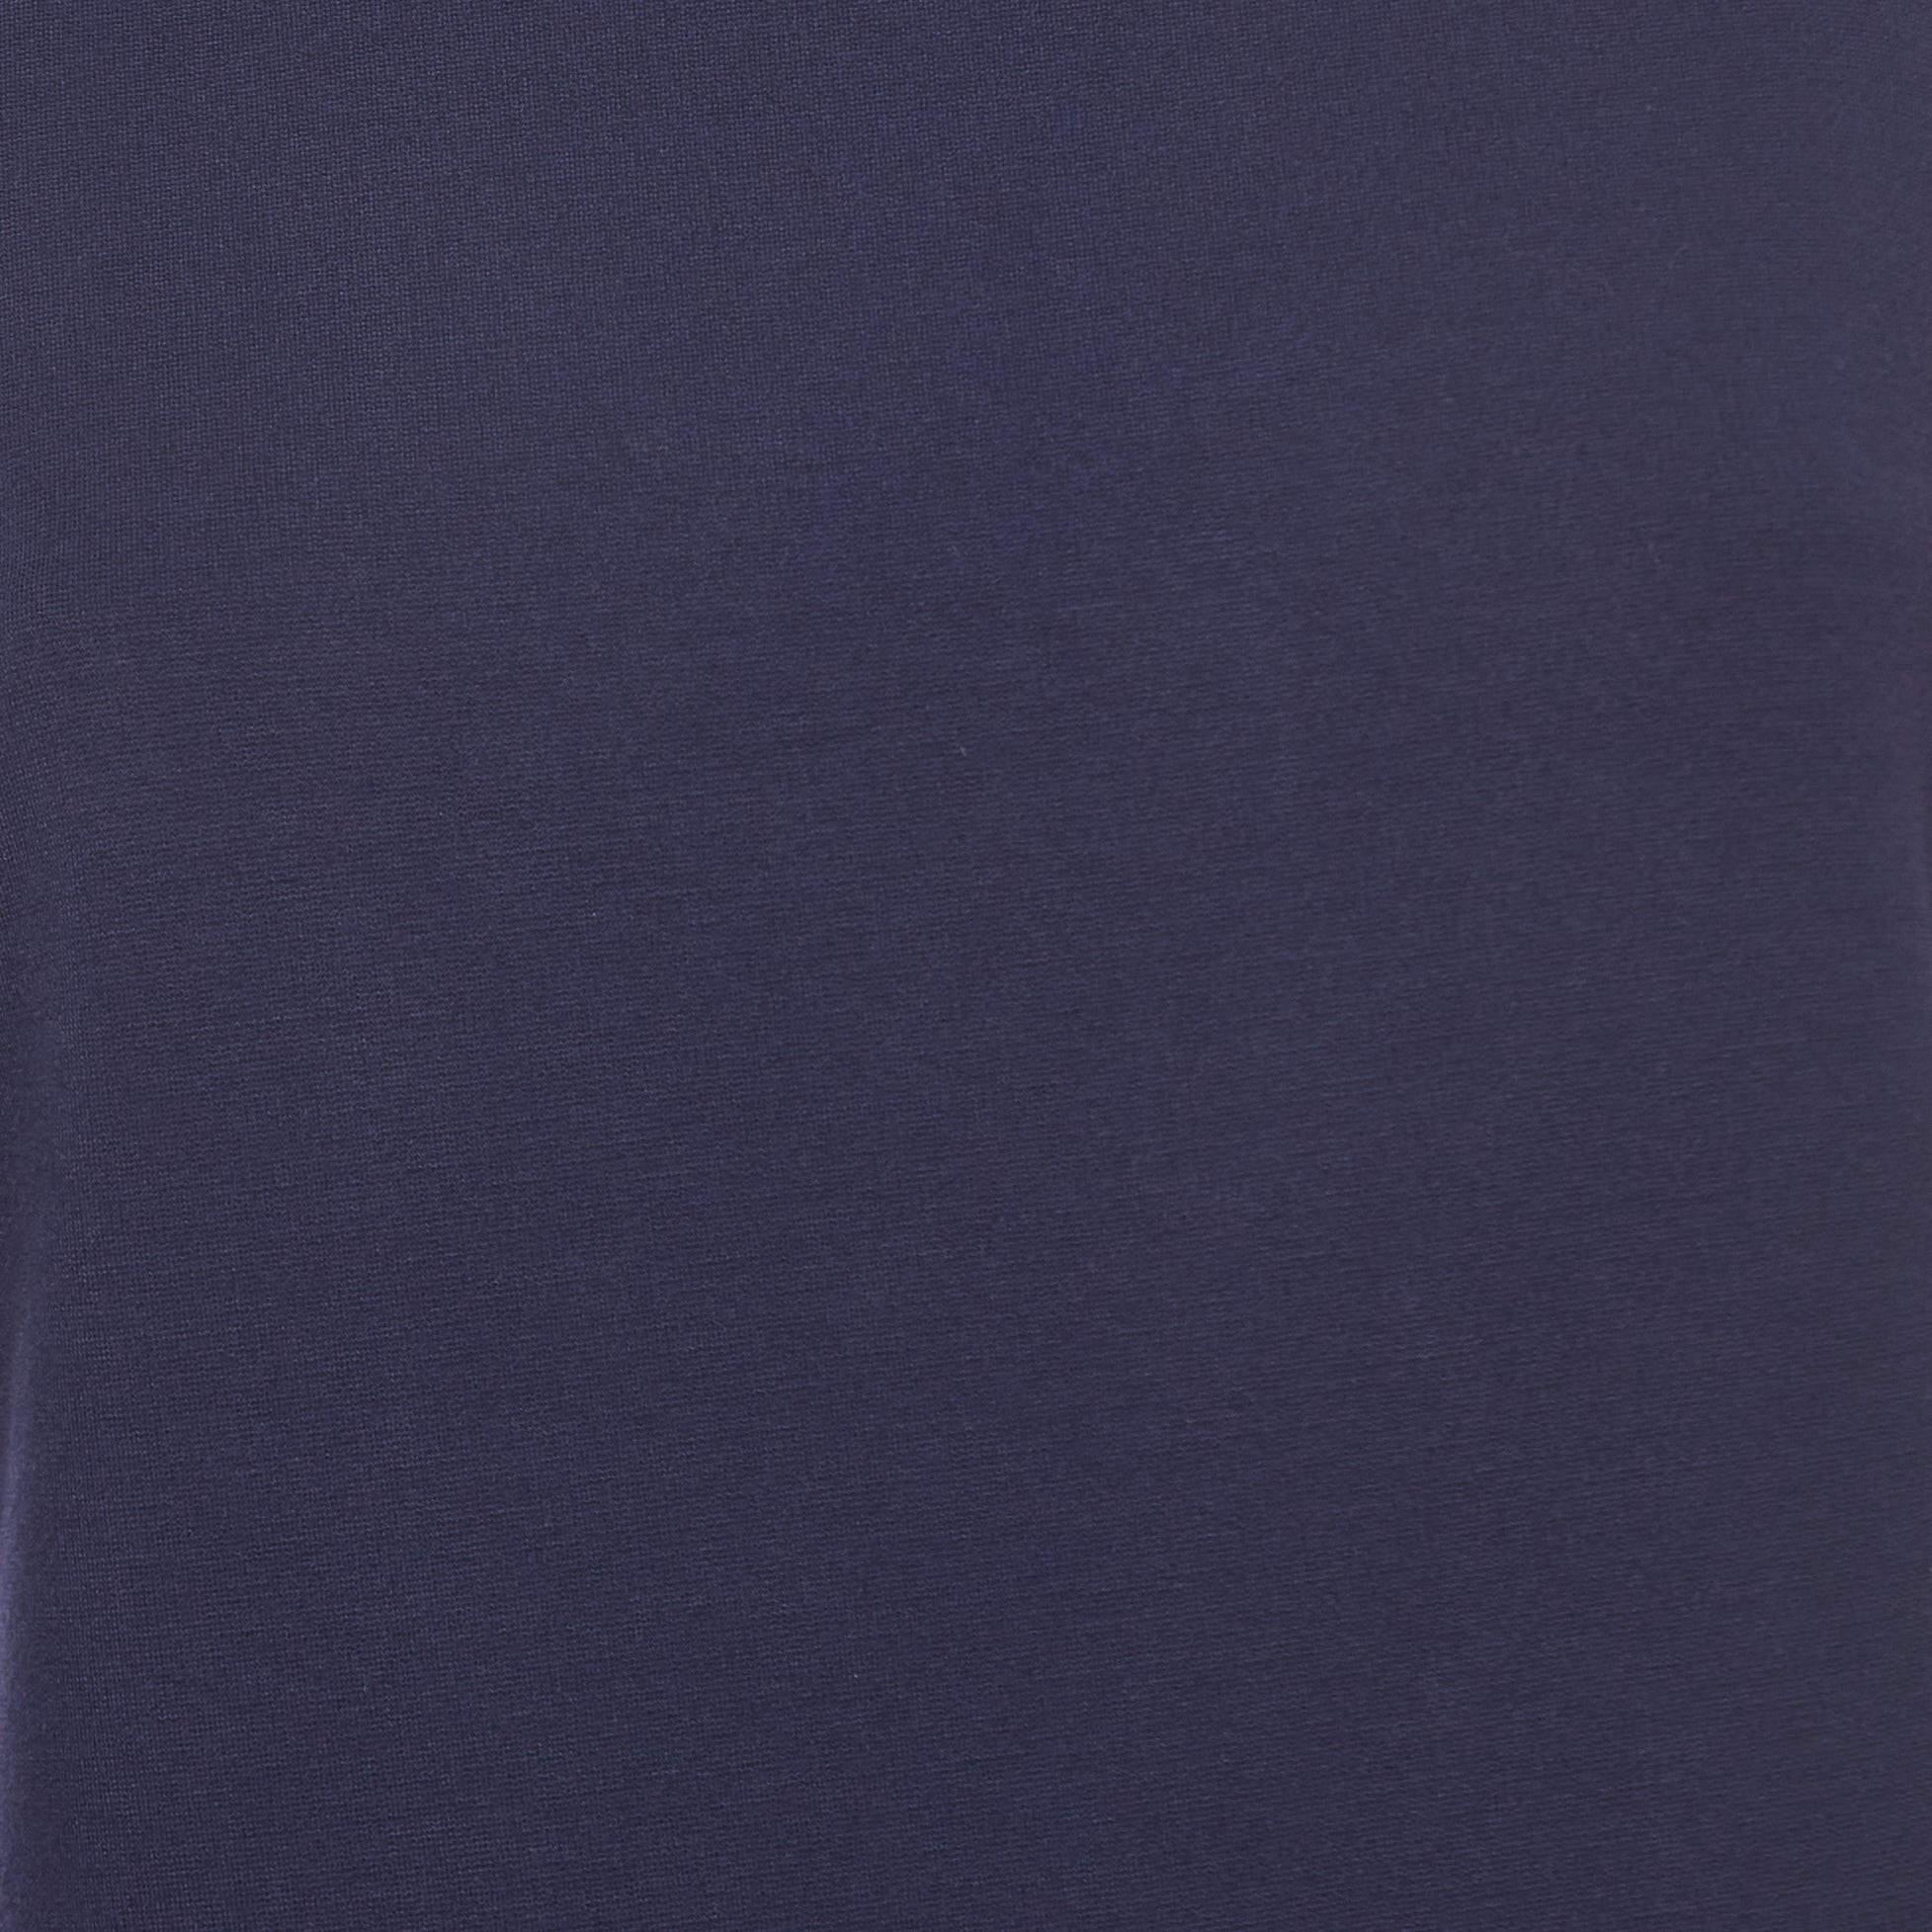 Diane Von Furstenberg Navy Blue/Black Knit Contrast Short Dress M For Sale 1